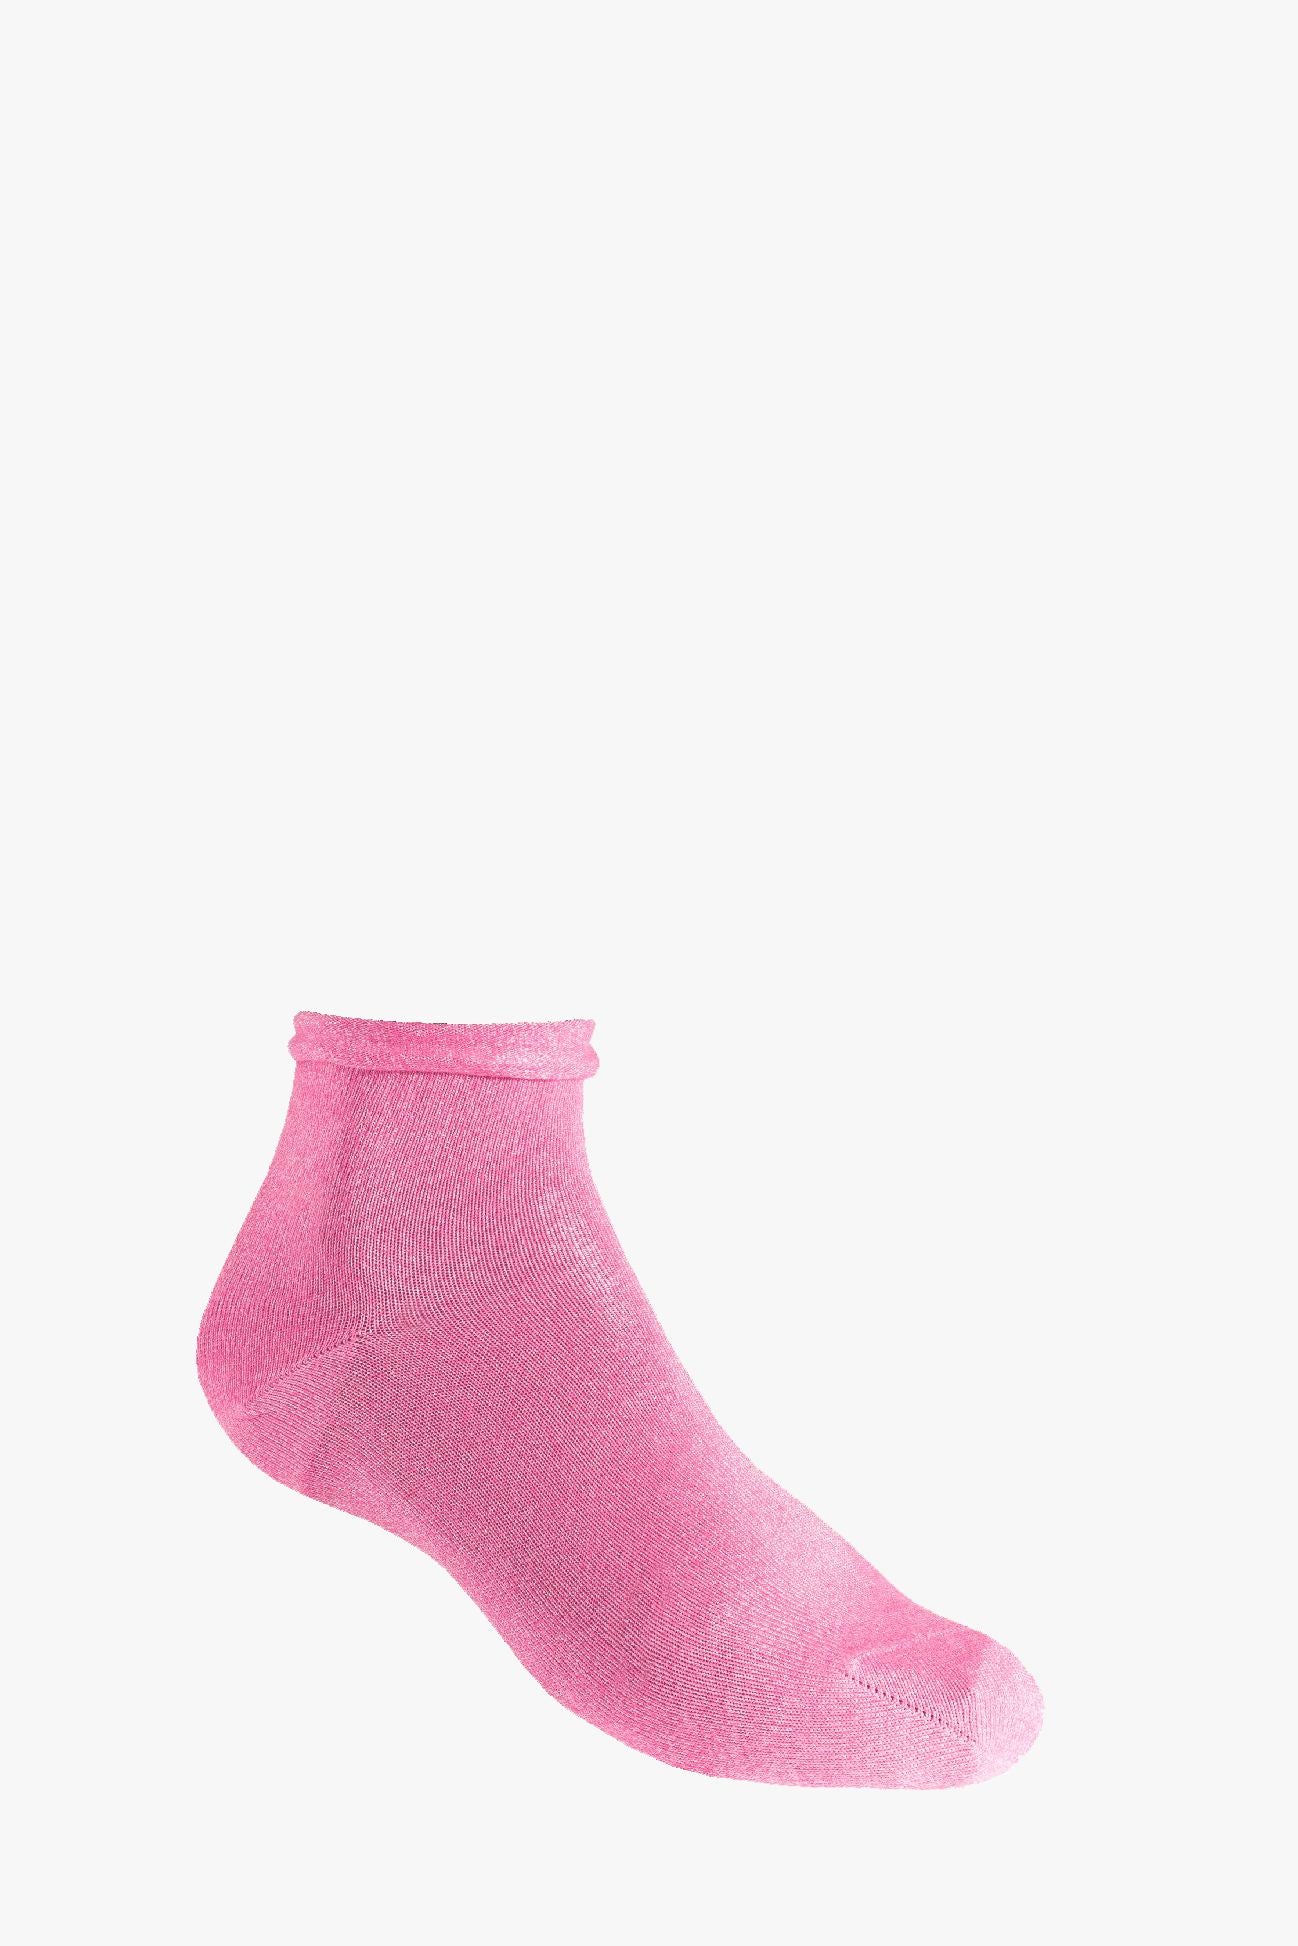 Lifestyle Ice Socks 308 | Minisocks in cotone Egitto